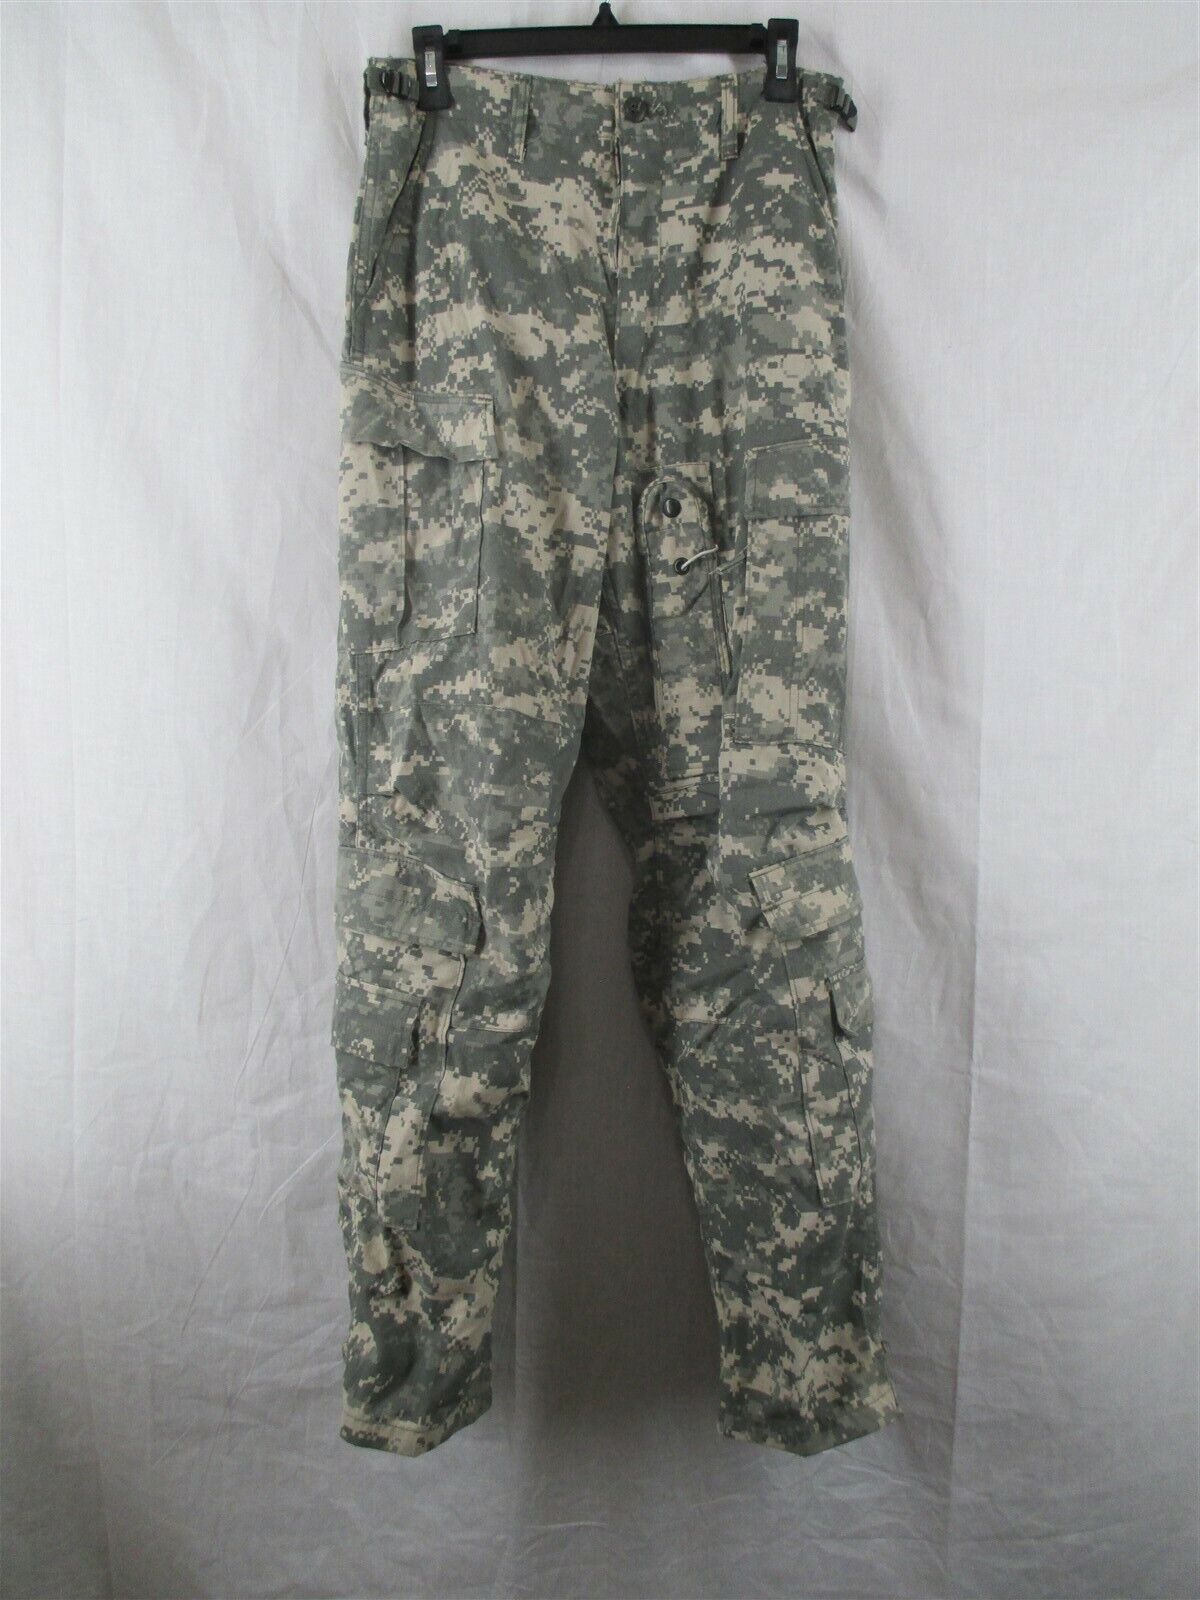 Aramid/Nomex Small Regular Army Aircrew Pants/Trousers Digital Camo A2CU ACU USG